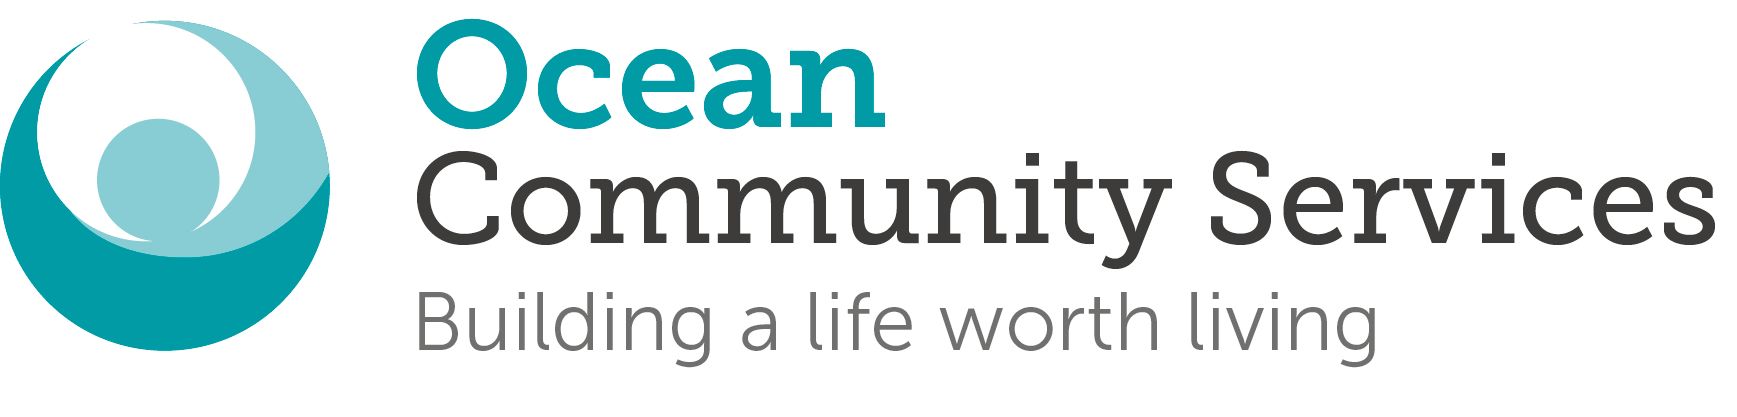 Ocean Community Services